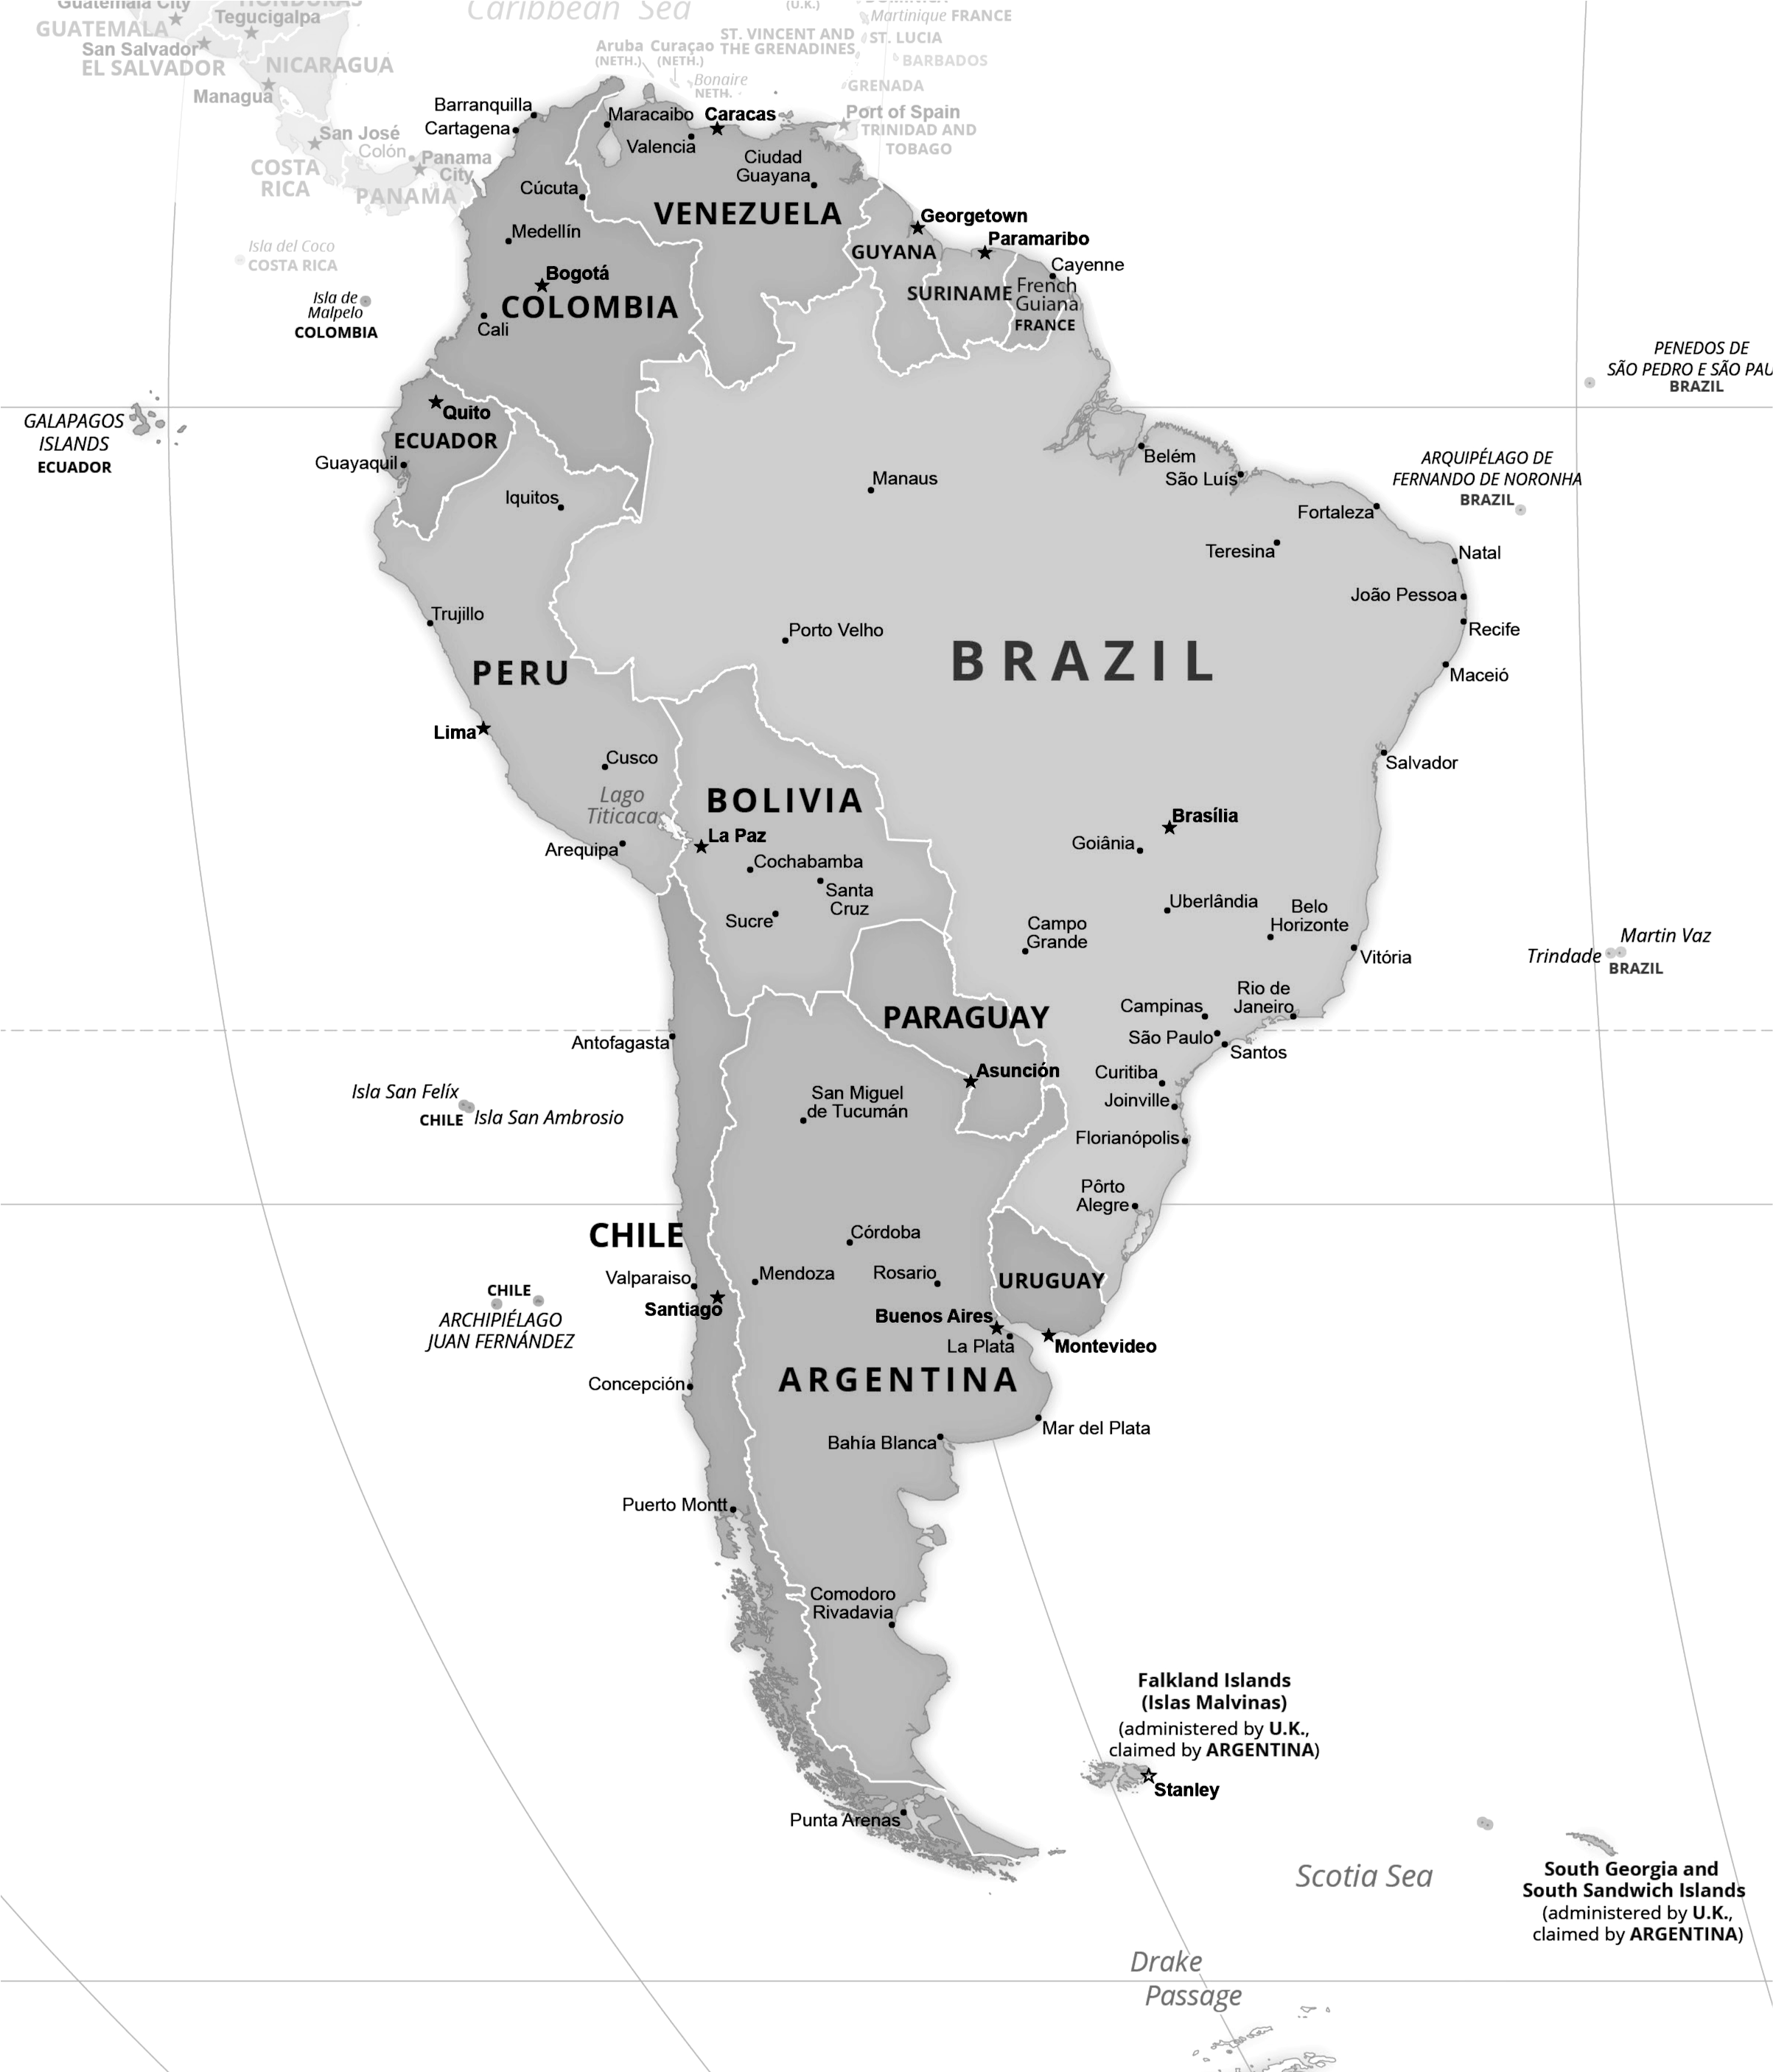 A black-and-white map of South America, including Brazil, Venezuela, Colombia, Ecuador, Peru, Bolivia, Paraguay, Uruguay, Argentina, and Chile.